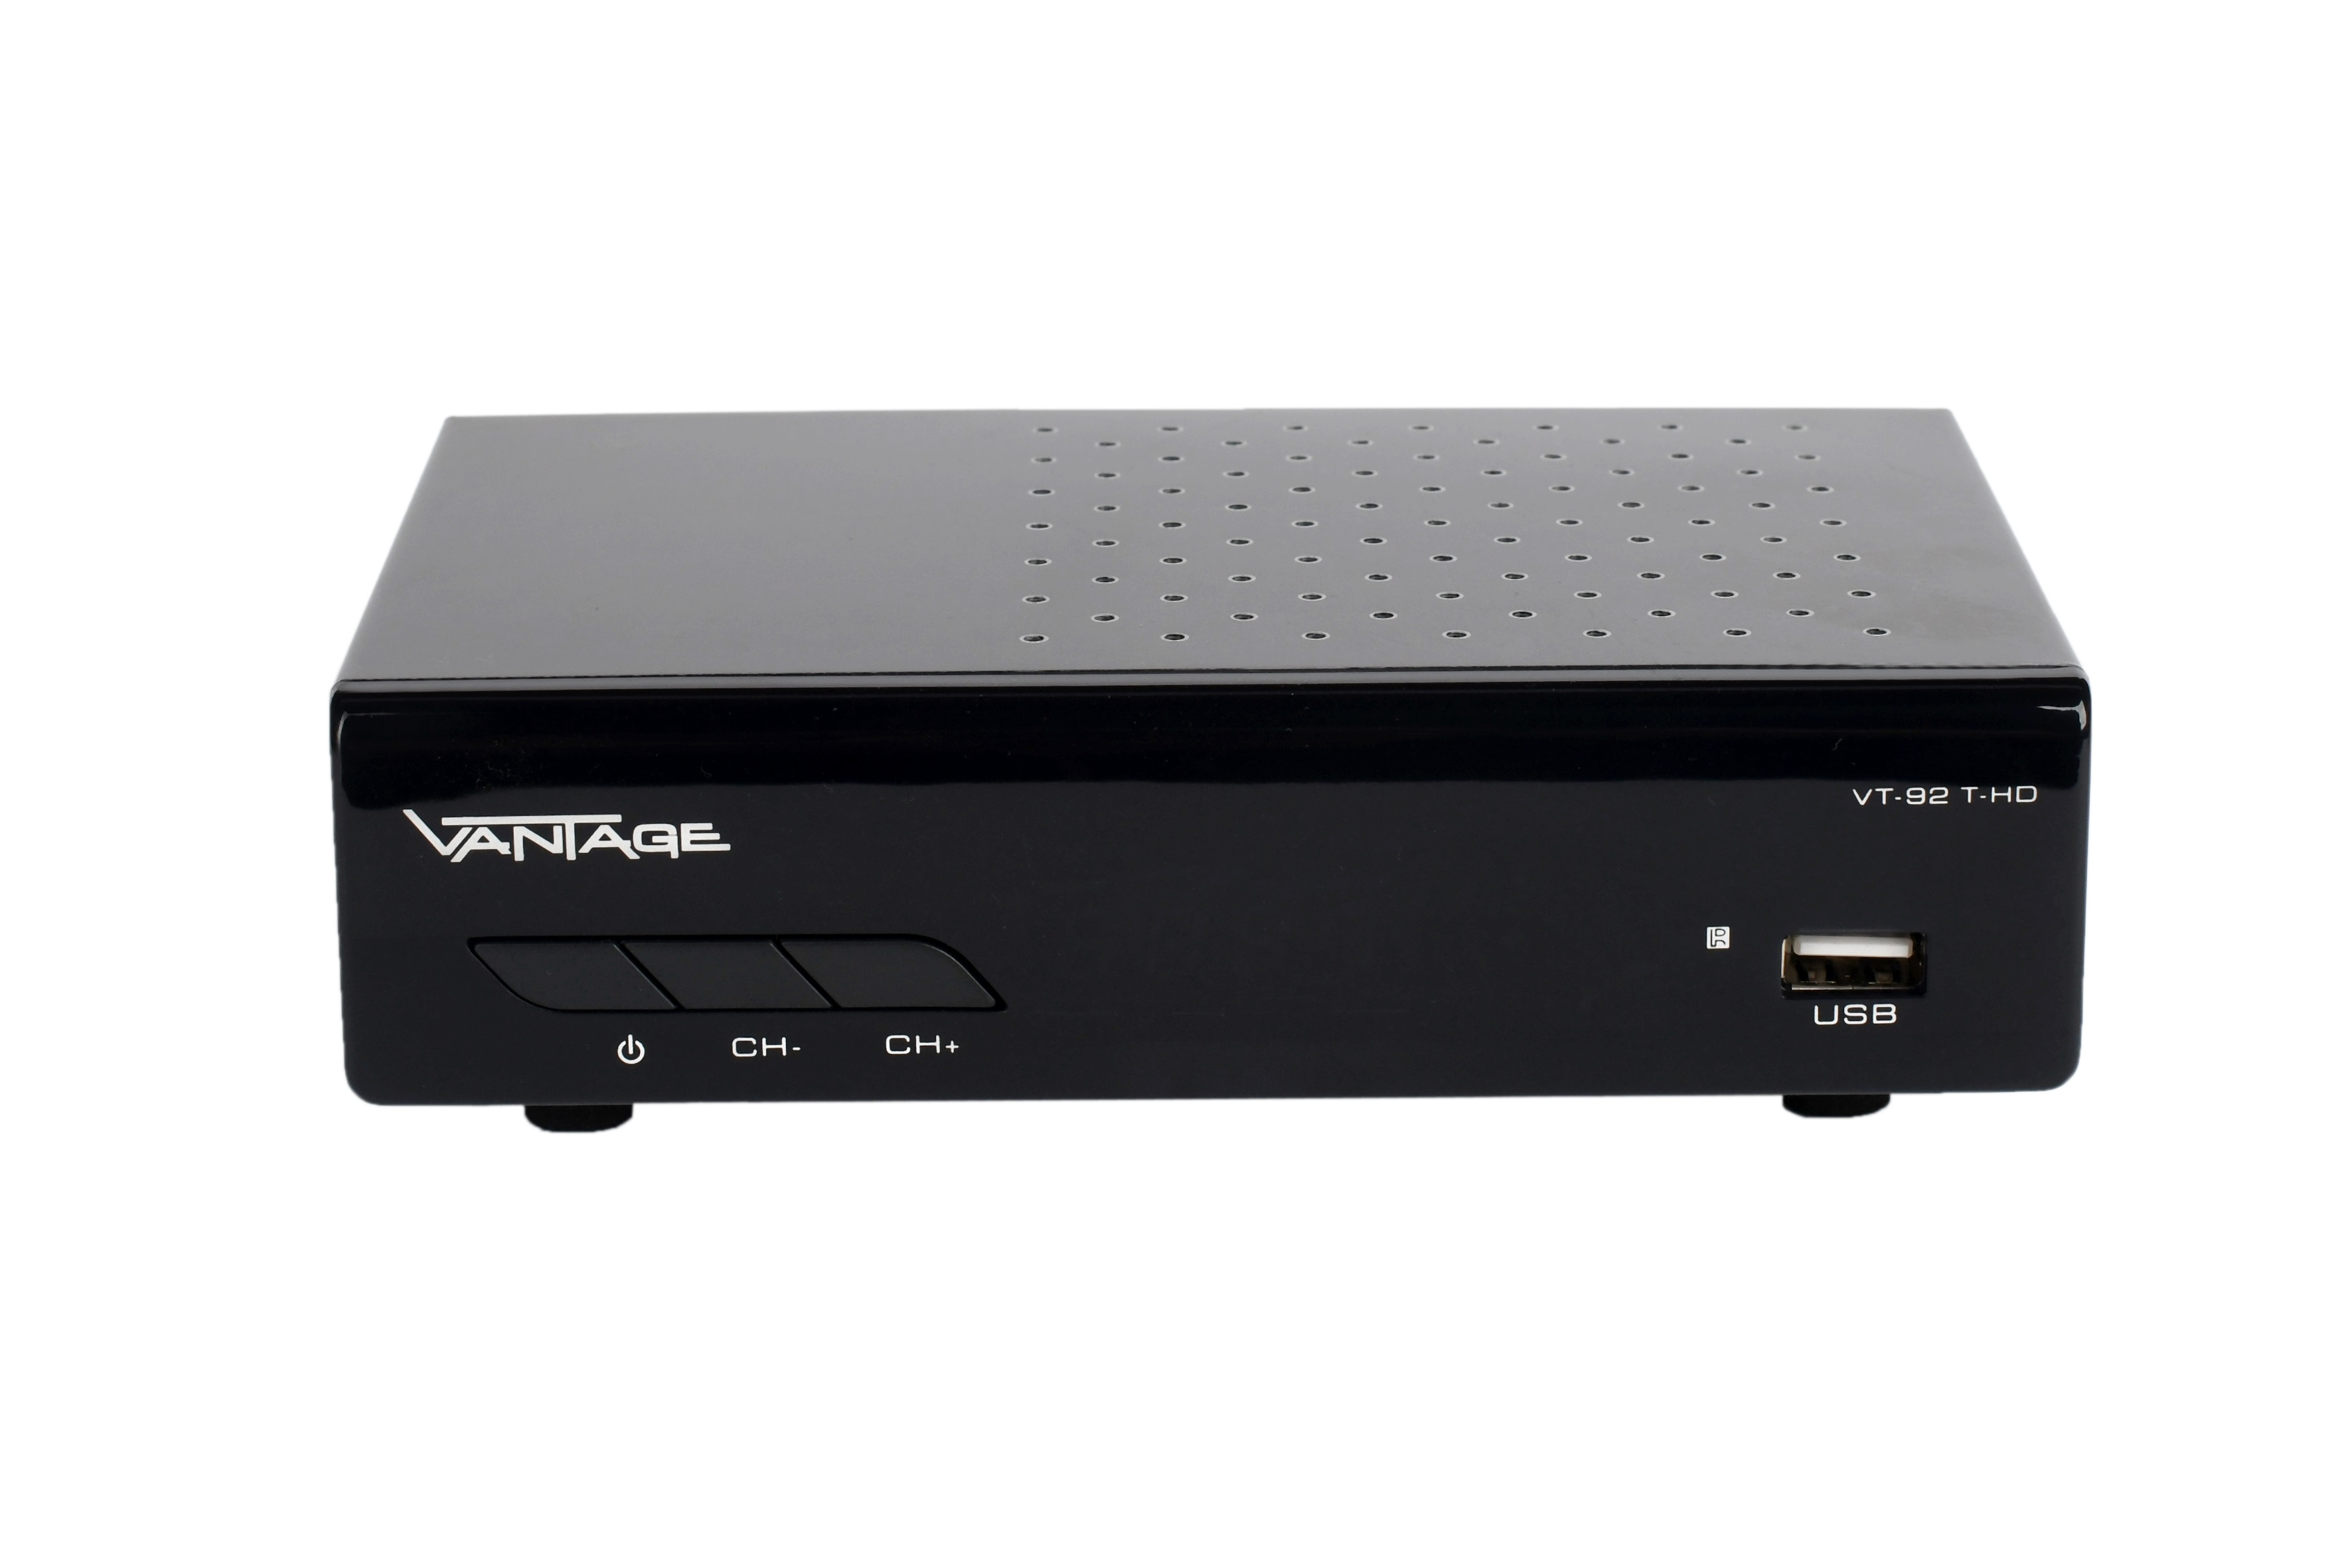 (H.265), VANTAGE schwarz) VT-92 DVB-T-Receiver DVB-T2 (DVB-T,